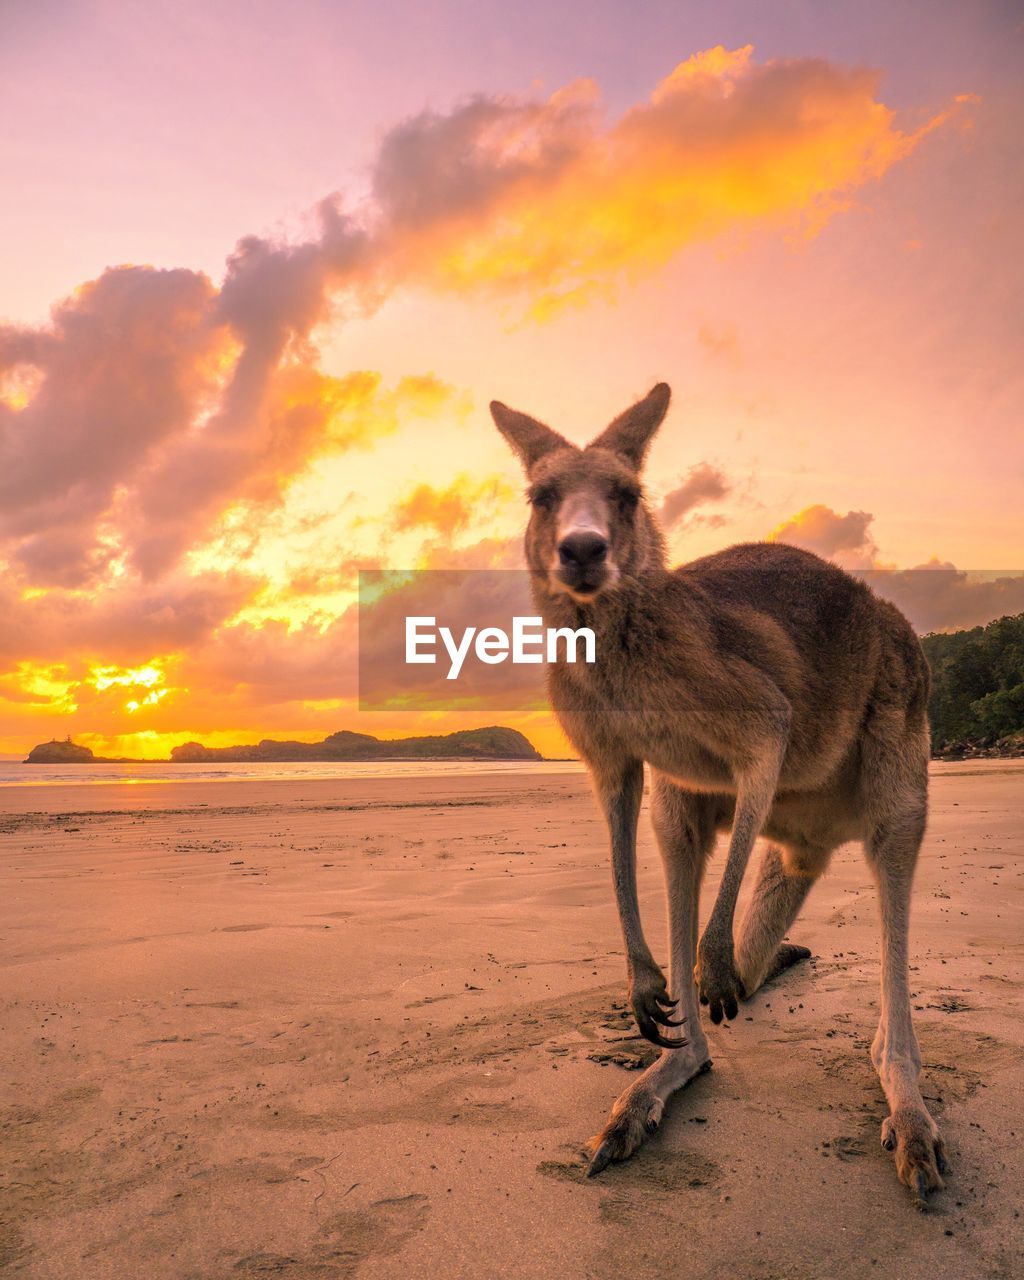 Kangaroo standing at beach against sky during sunset